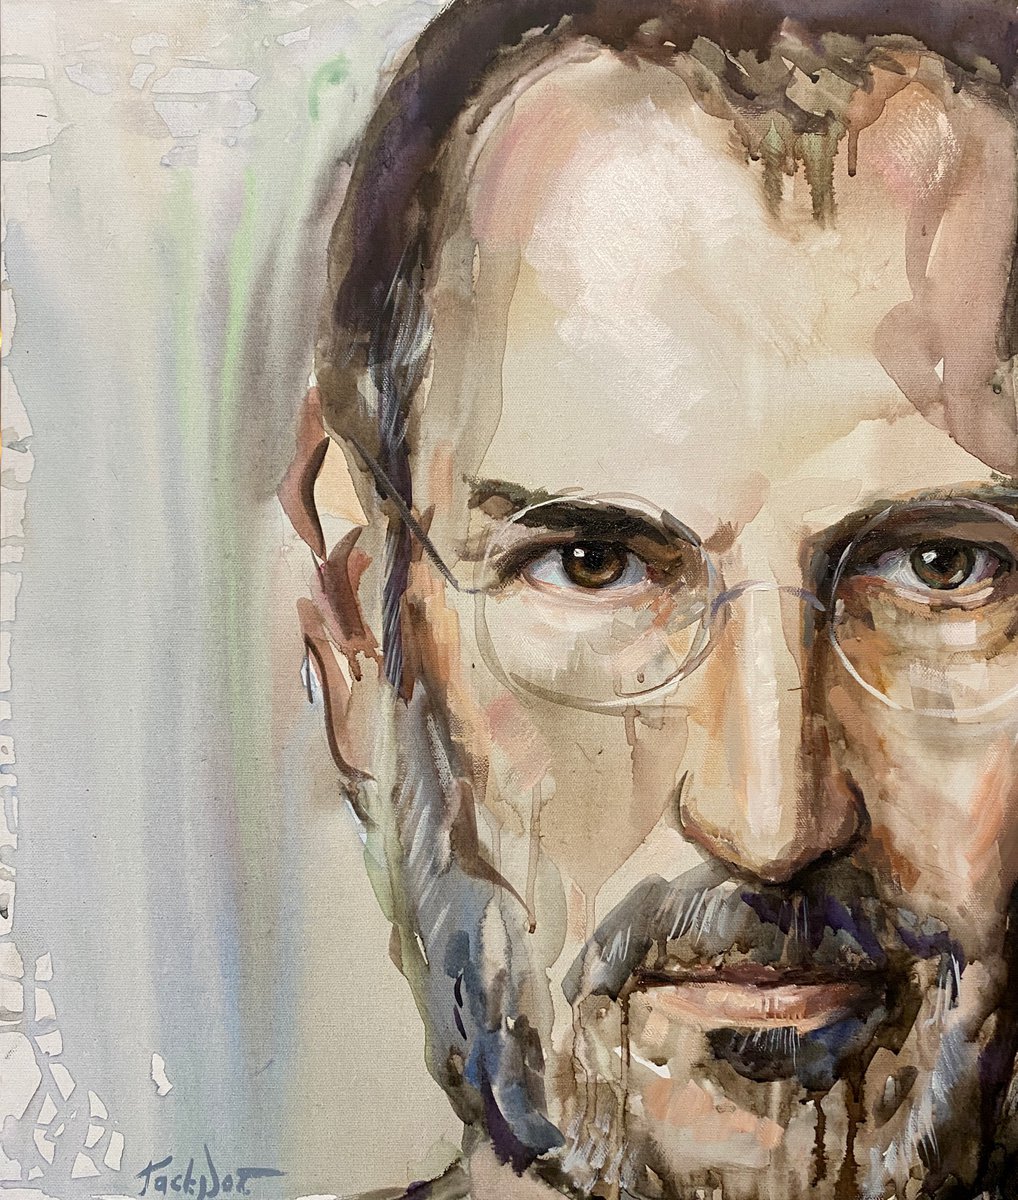 Steve Jobs portrait watercolor painting oil portrait canvas art Original wall art by Evgeny Potapkin